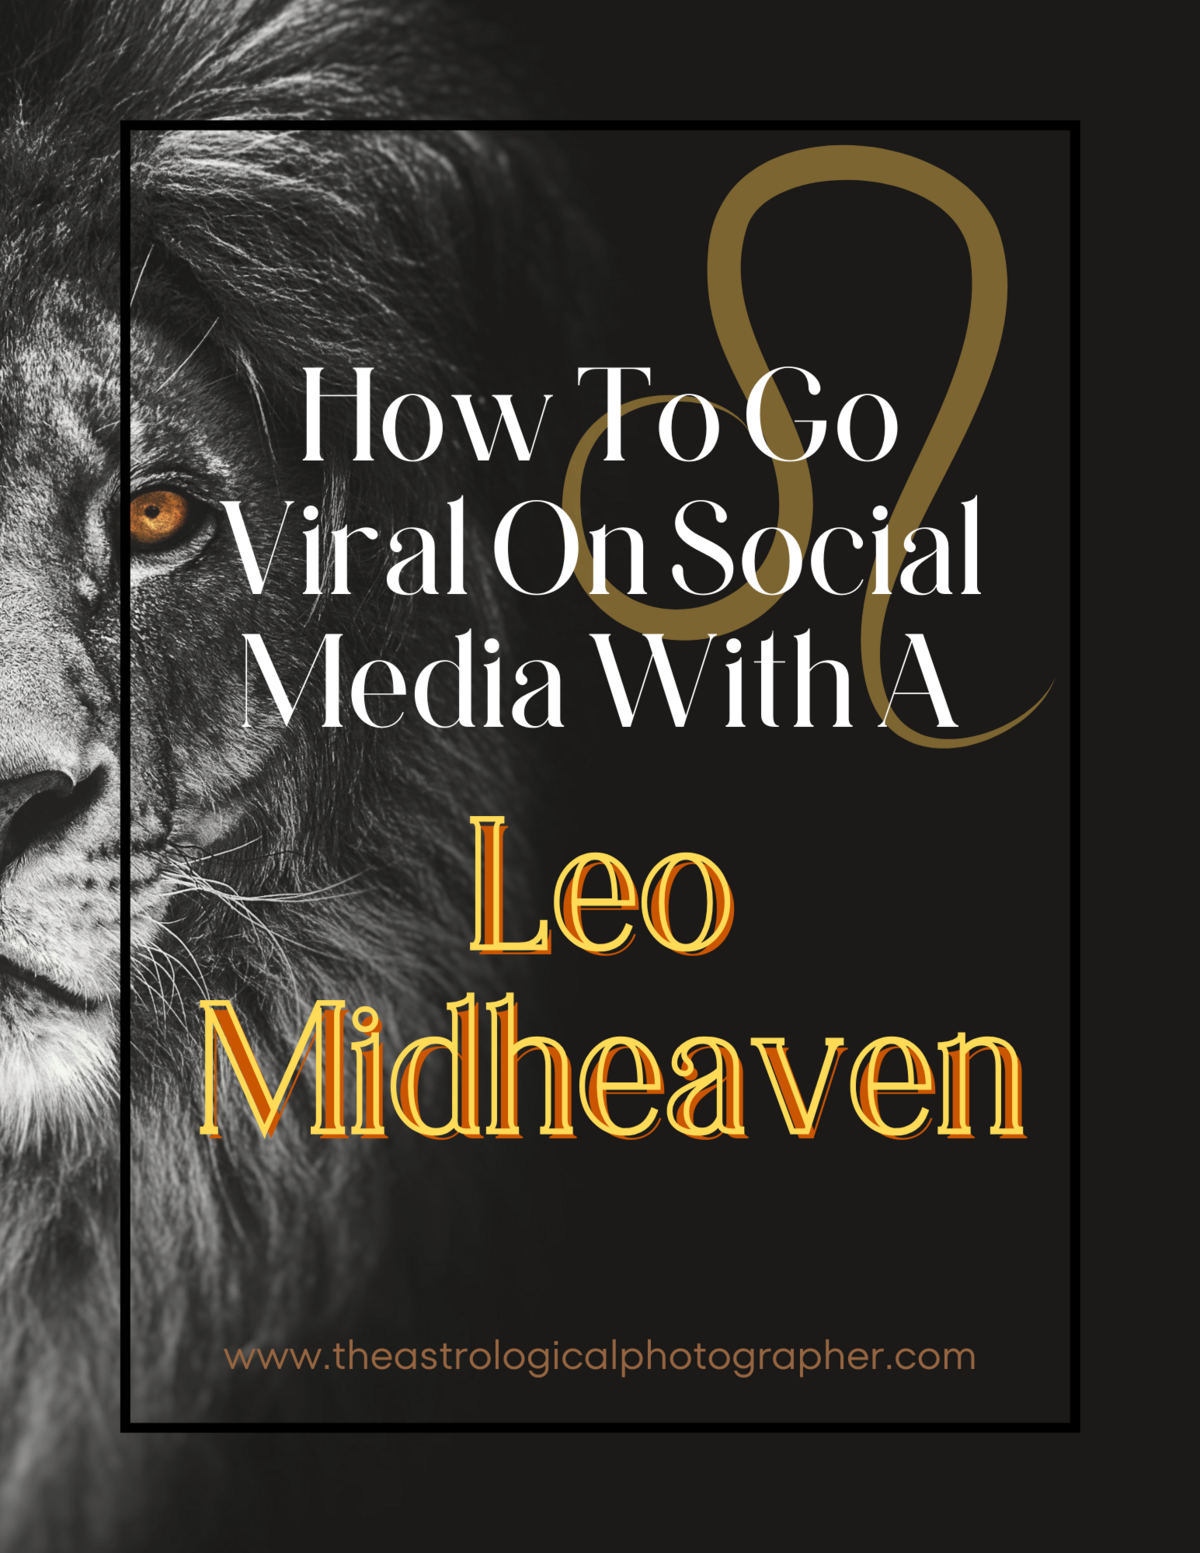 Leo Midheaven Guide 1